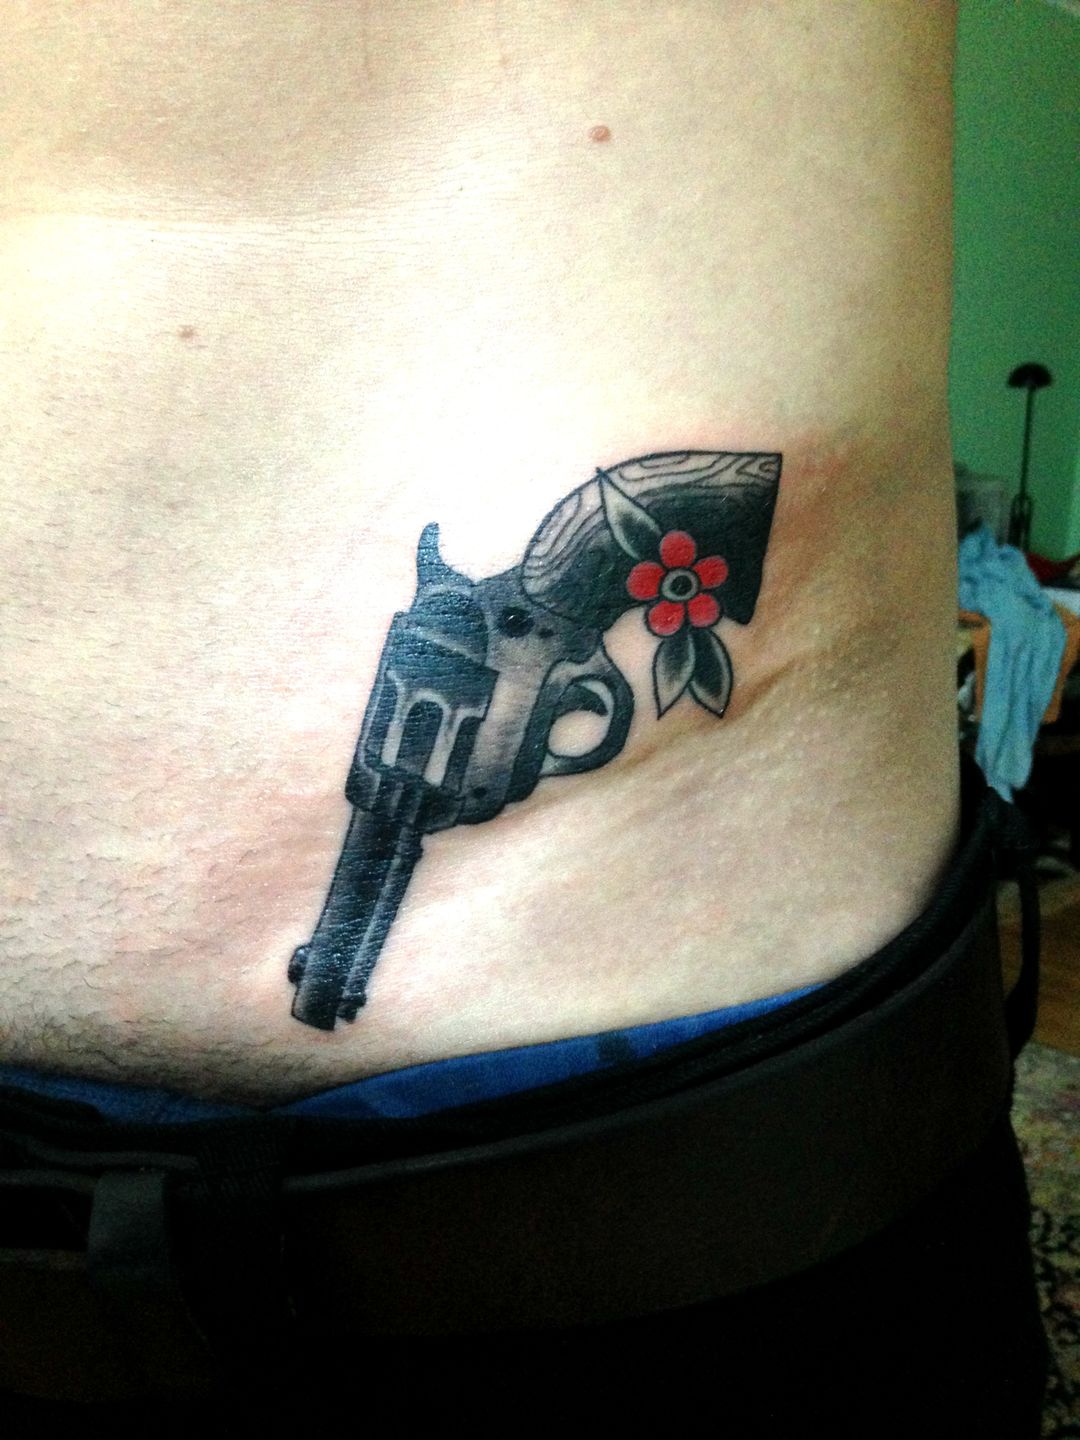 40 Awesome Pistol Gun Tattoos Design Ever Made